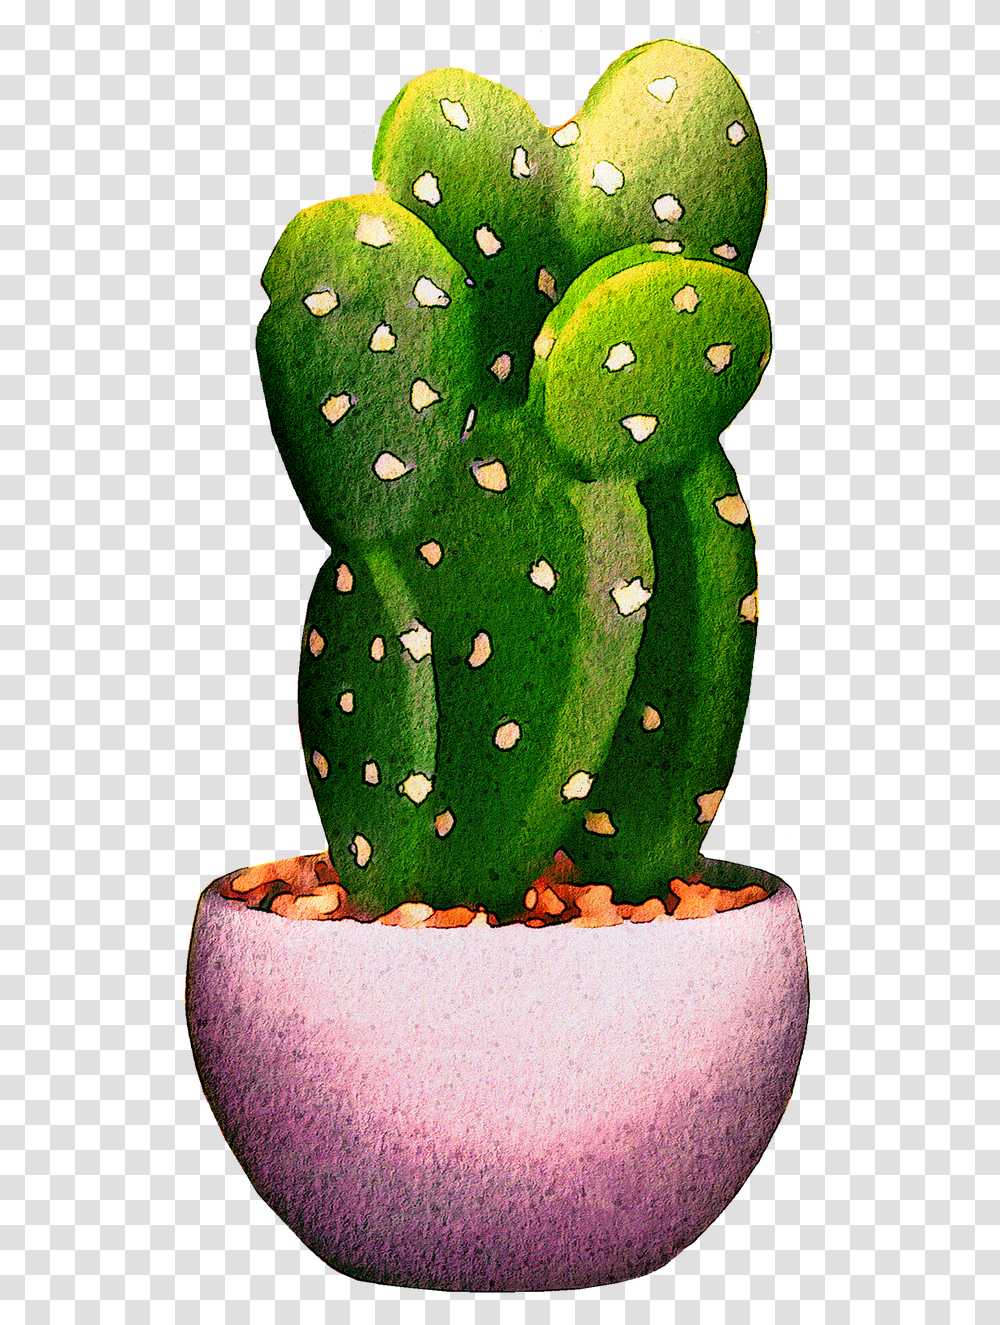 Watercolor Cactus Succulents Cacti Free Image On Pixabay Cactos E Suculentas, Plant, Food, Relish, Pickle Transparent Png